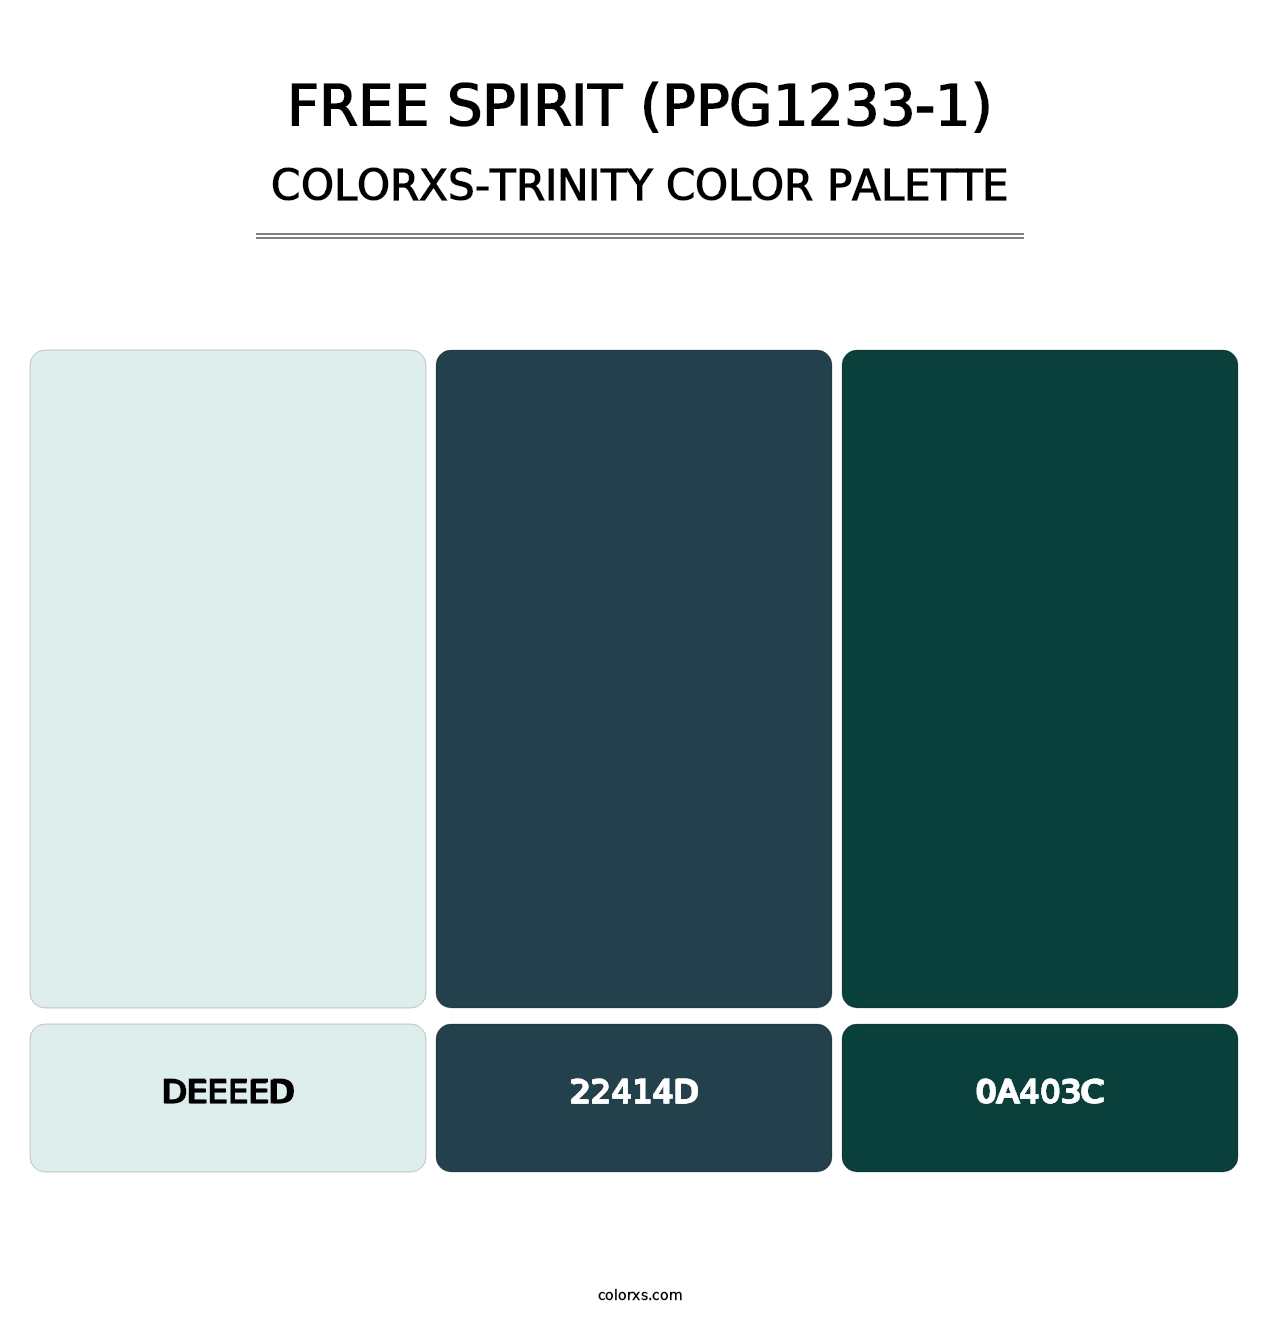 Free Spirit (PPG1233-1) - Colorxs Trinity Palette